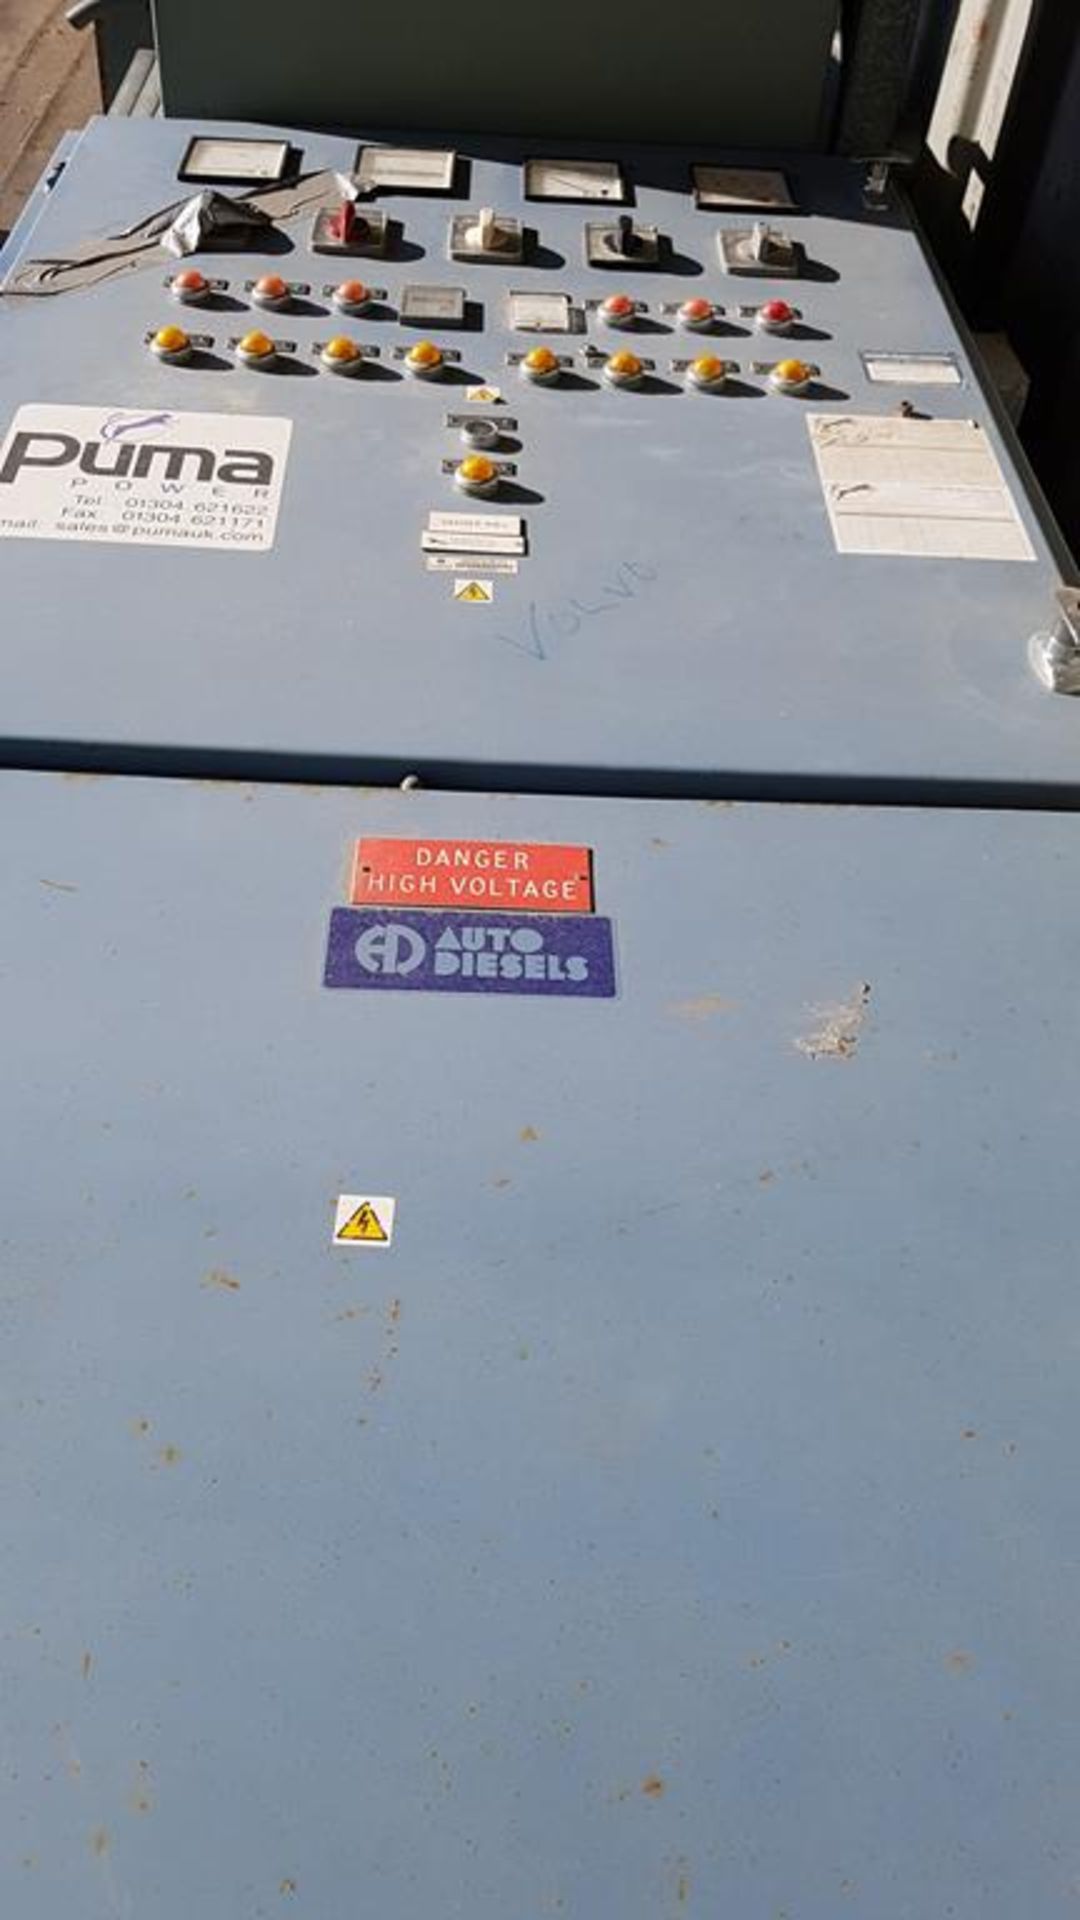 * Puma Generator Control Panel.